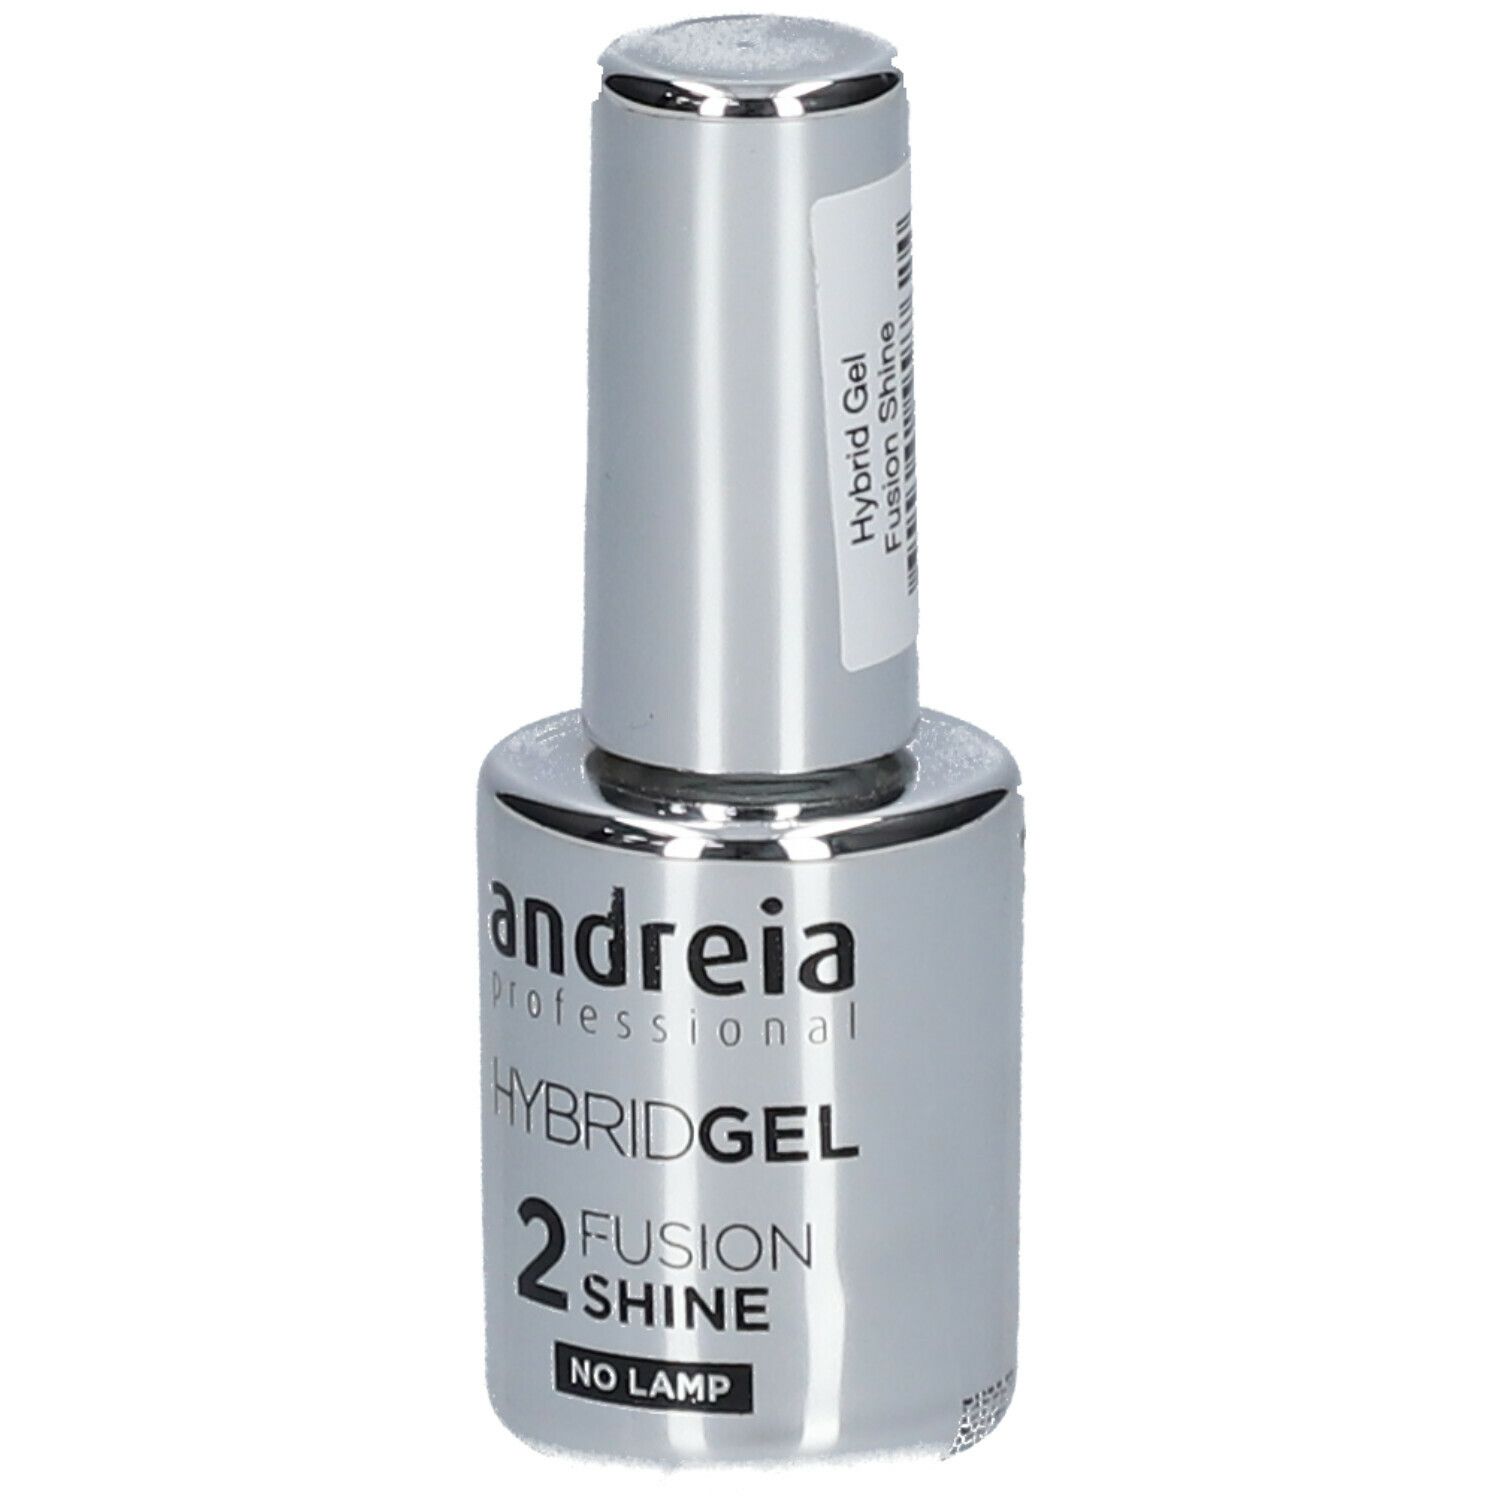 Eureka Care® Andreia HybridGel Topcoat Fusion Shine